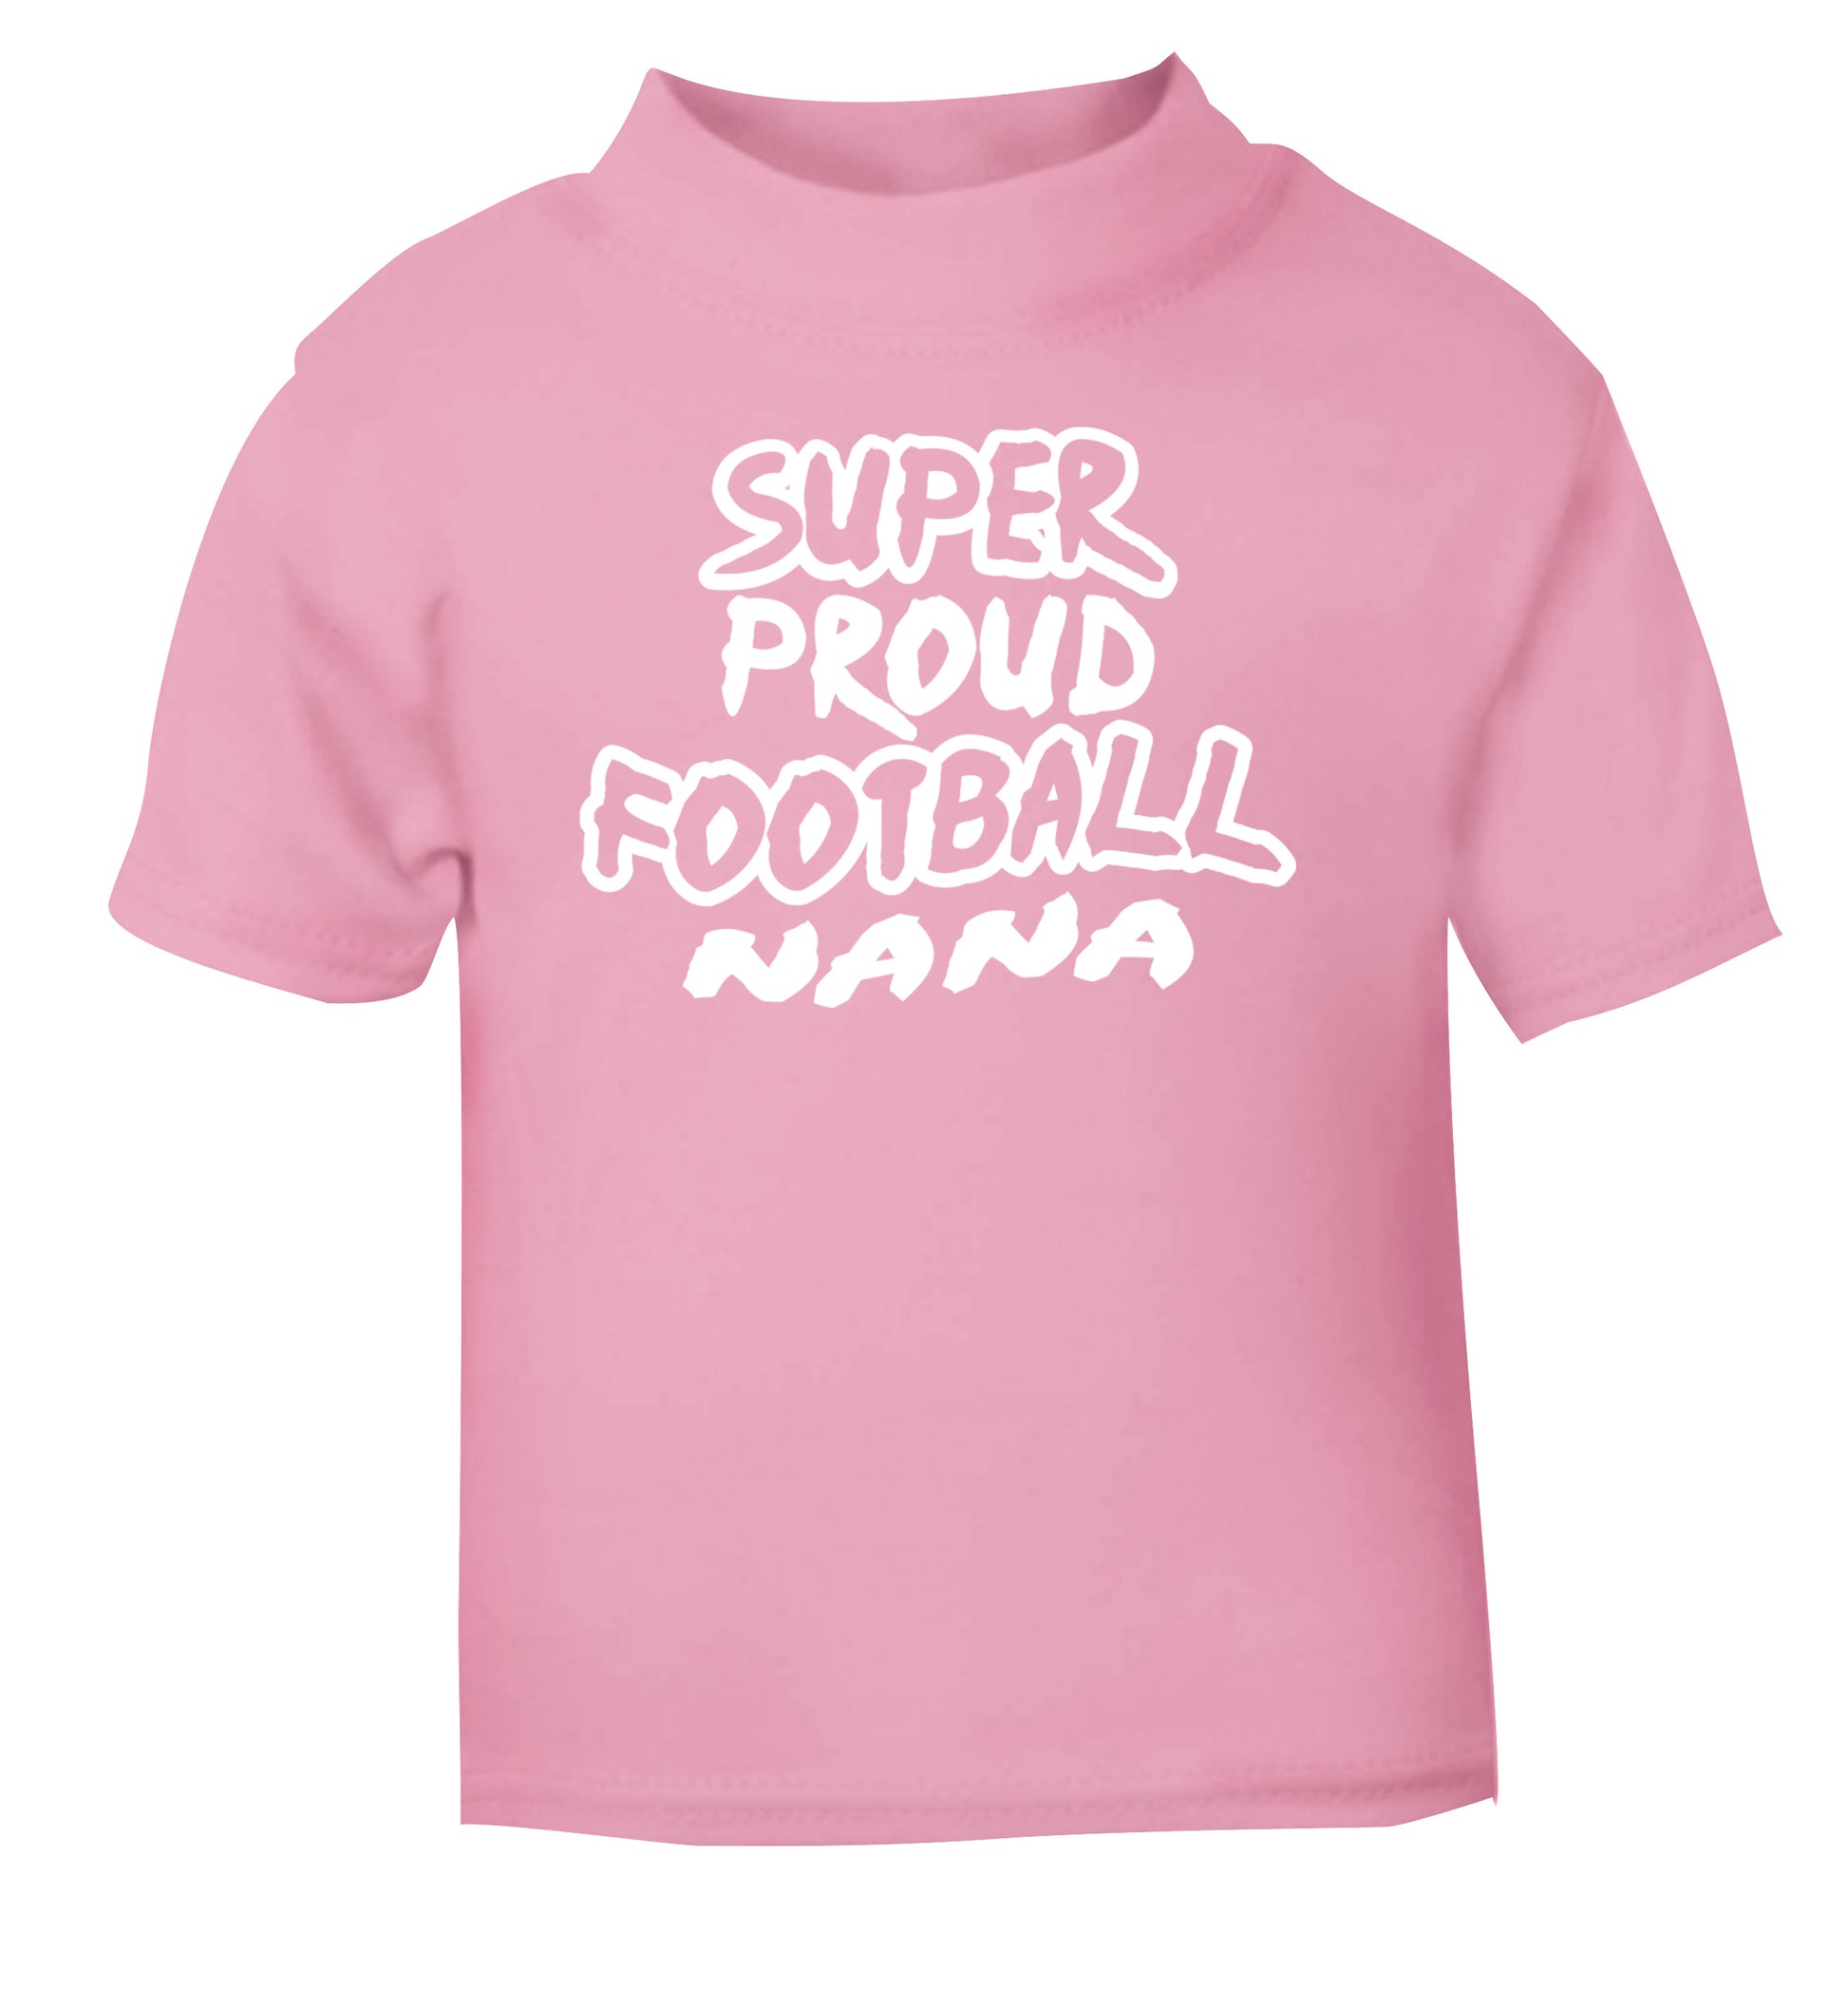 Super proud football nana light pink Baby Toddler Tshirt 2 Years